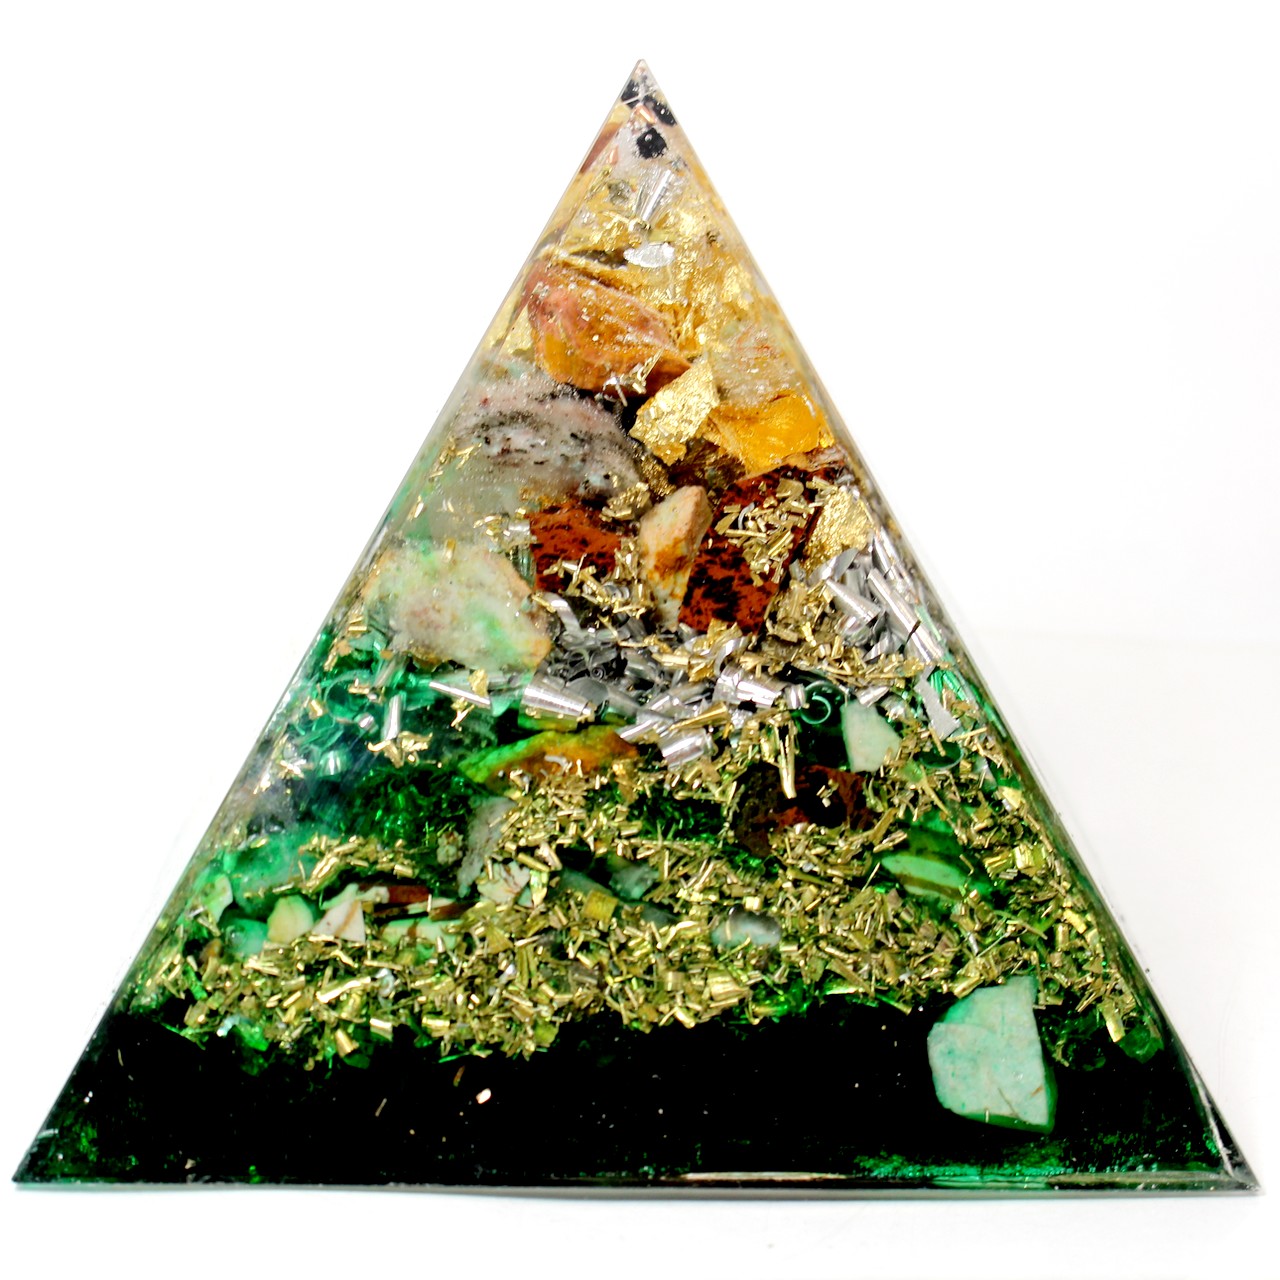 Orpanit® Orgonit 4. Chakra Premium Pyramide XL Erzengel Raphael grün Ruhe